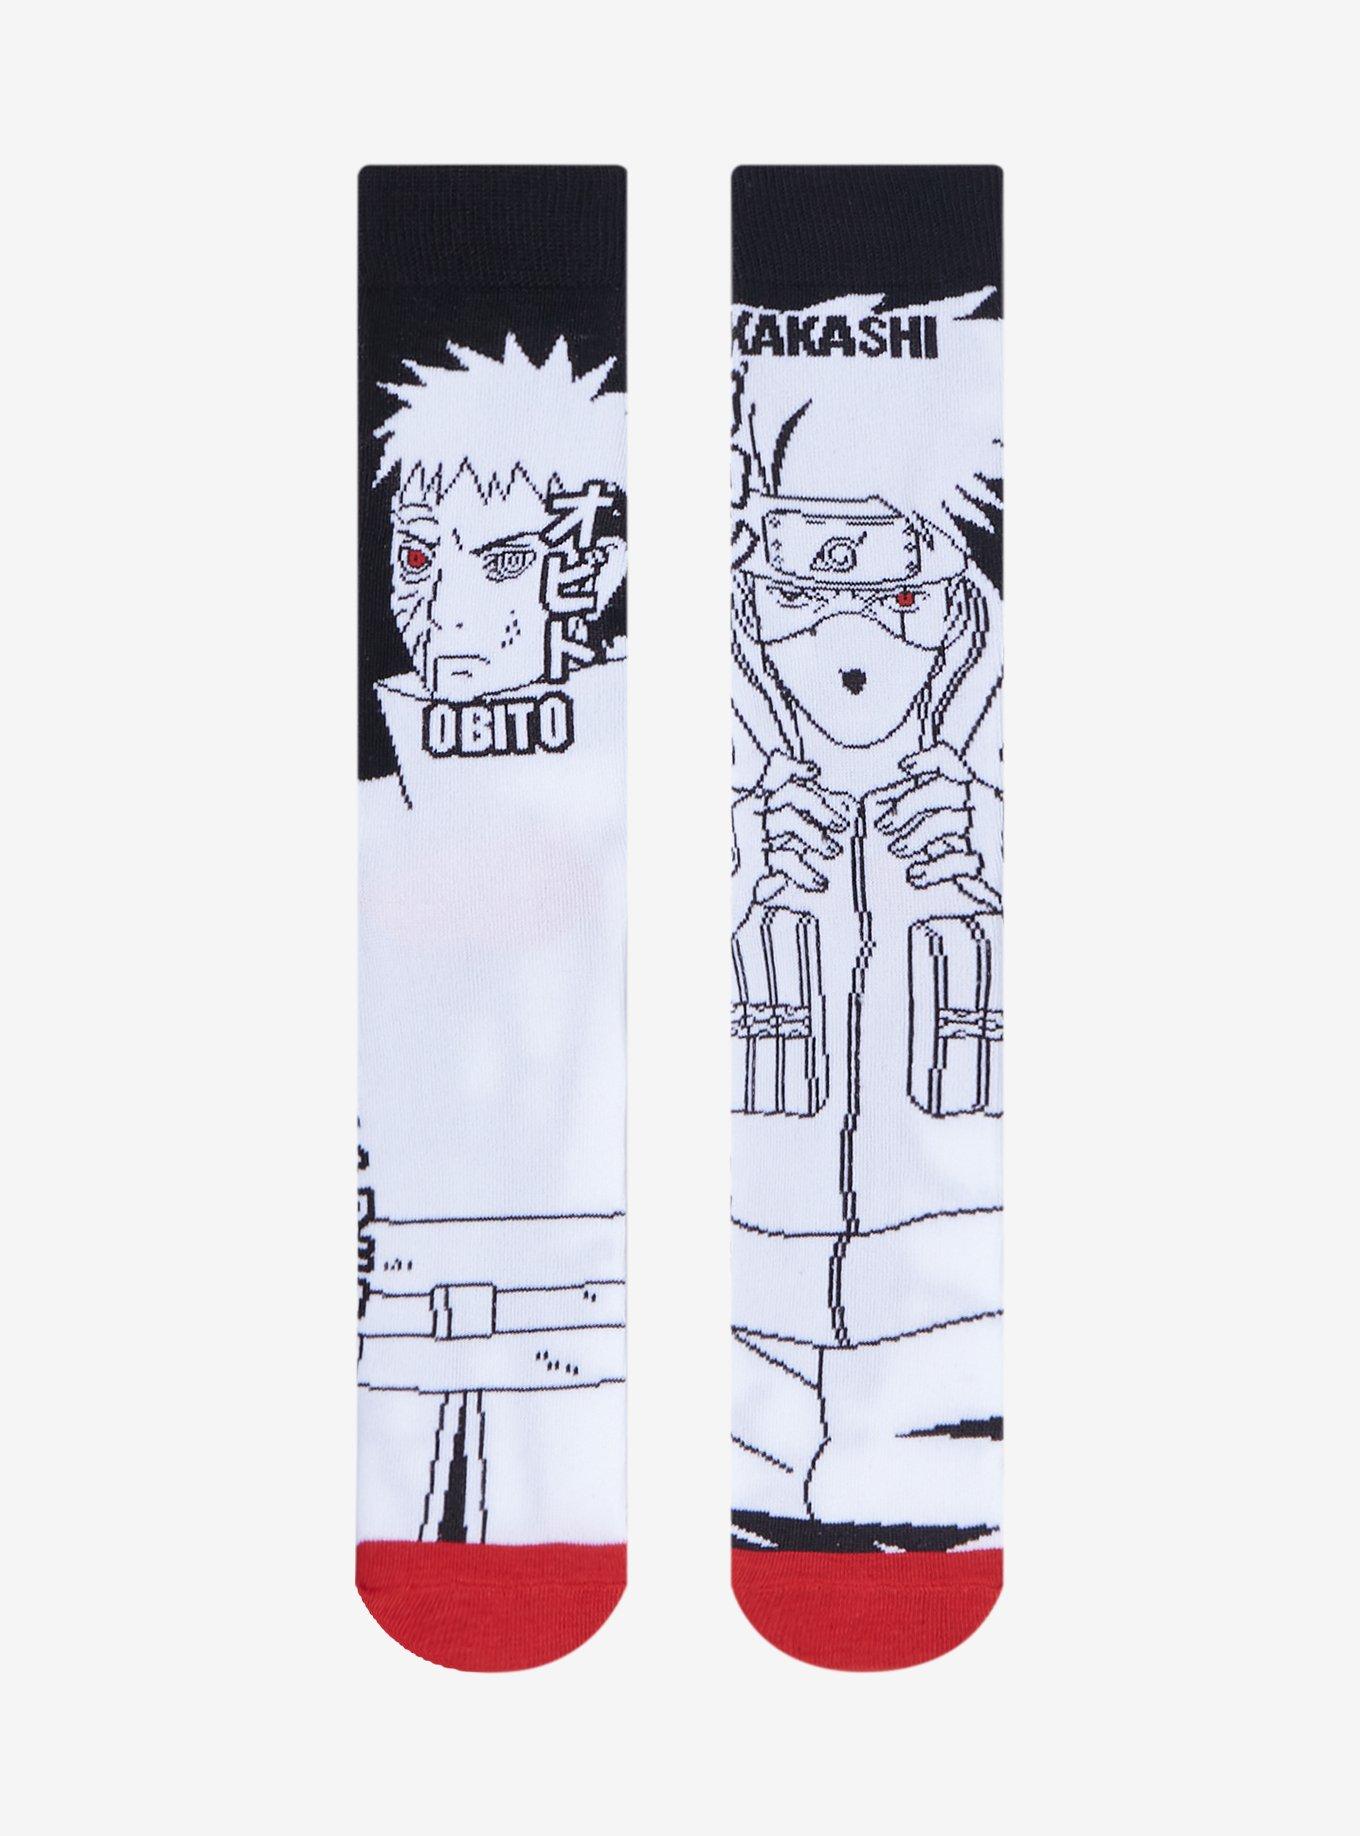 Naruto Shippuden Obito & Kakashi Mismatched Crew Socks, , hi-res